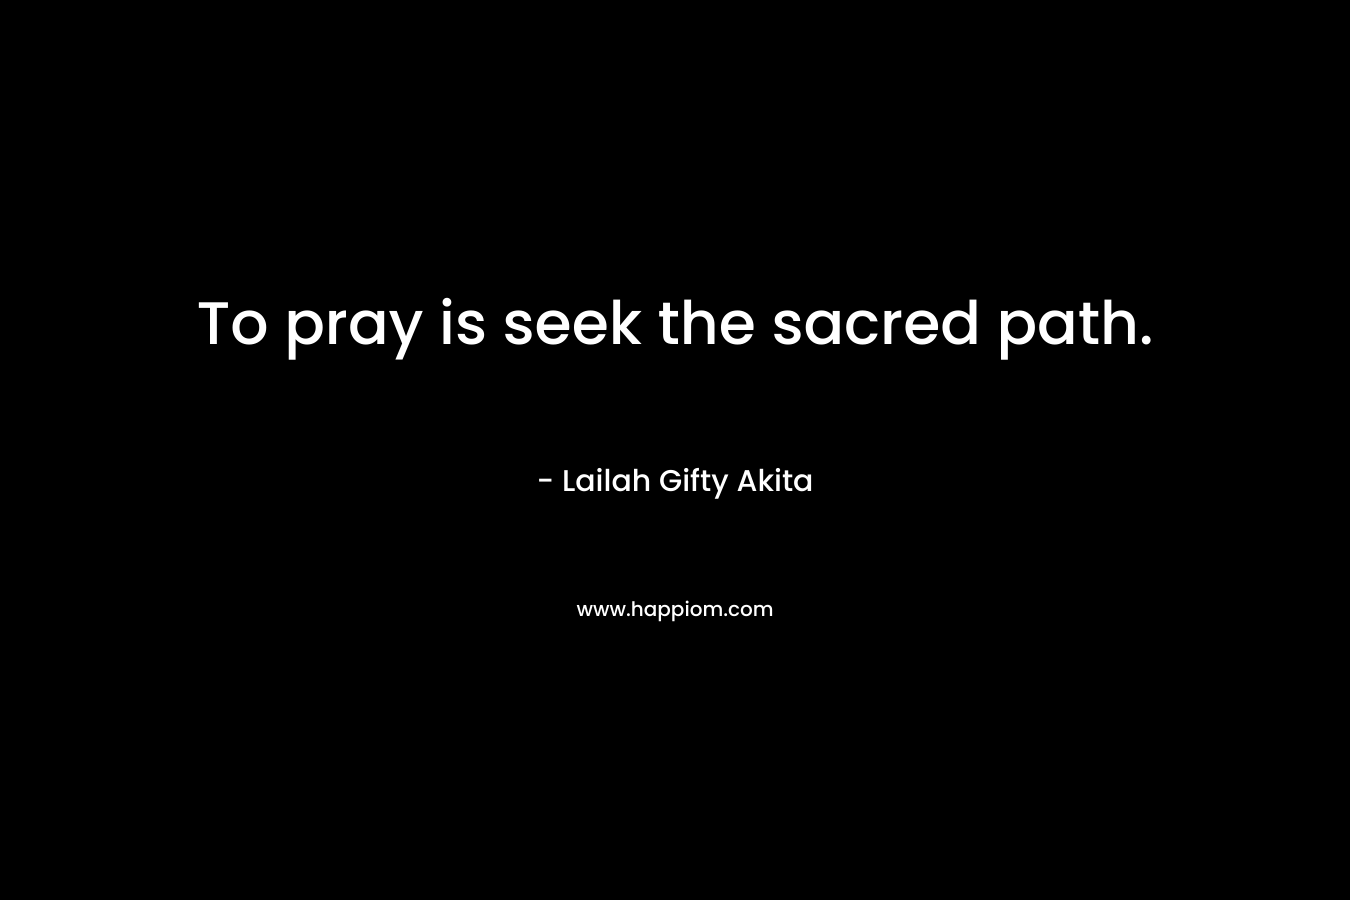 To pray is seek the sacred path.